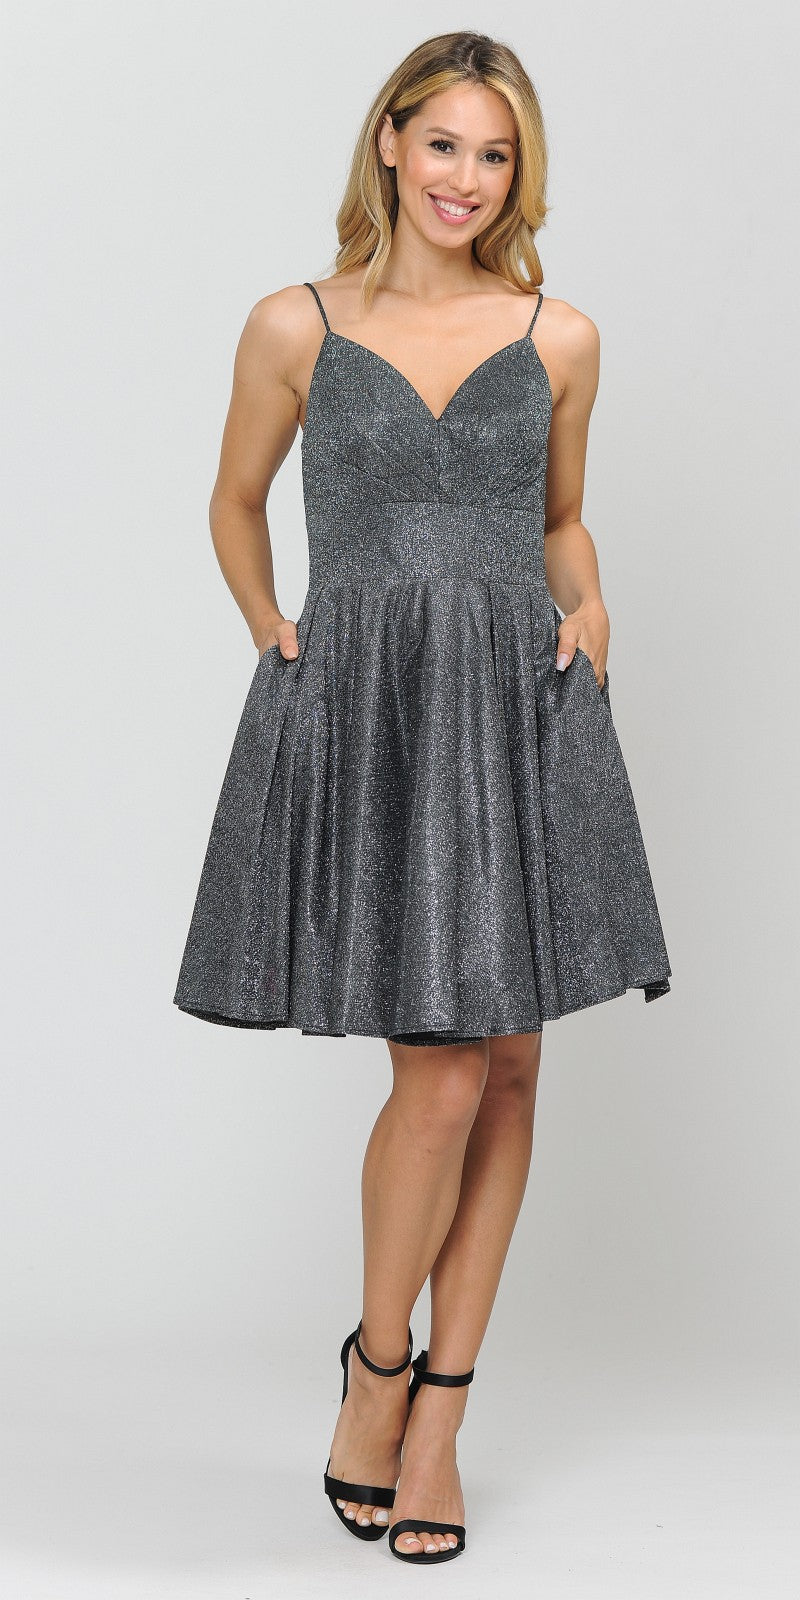 Poly USA 8530 Silver Black V-Neck Homecoming Short Dress with Pockets 